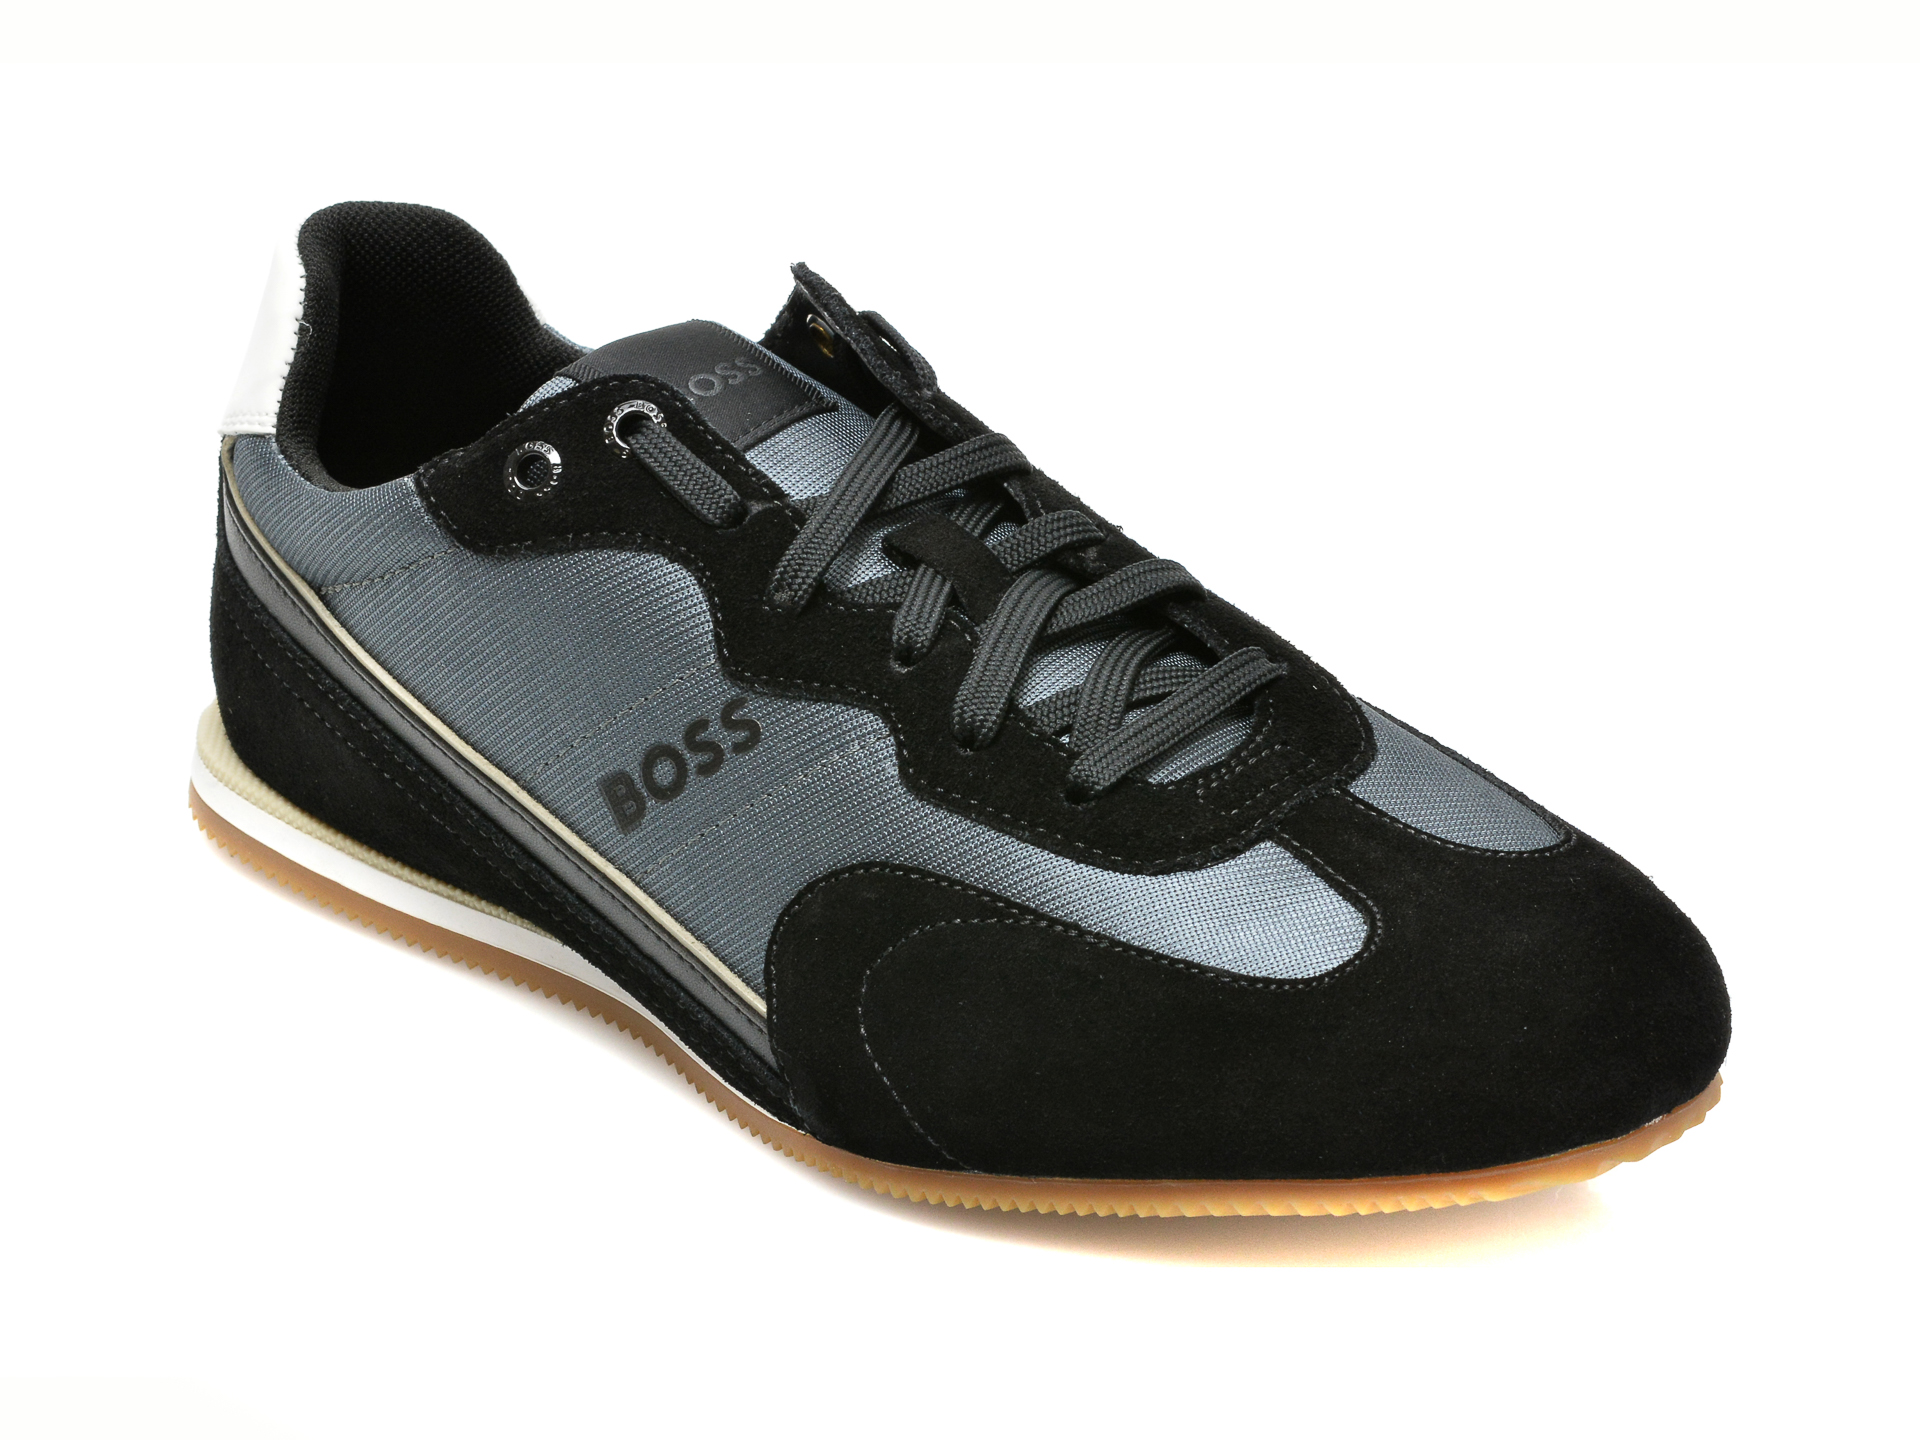 Pantofi sport HUGO BOSS negri, 4551, din material textil si piele ecologica /barbati/pantofi